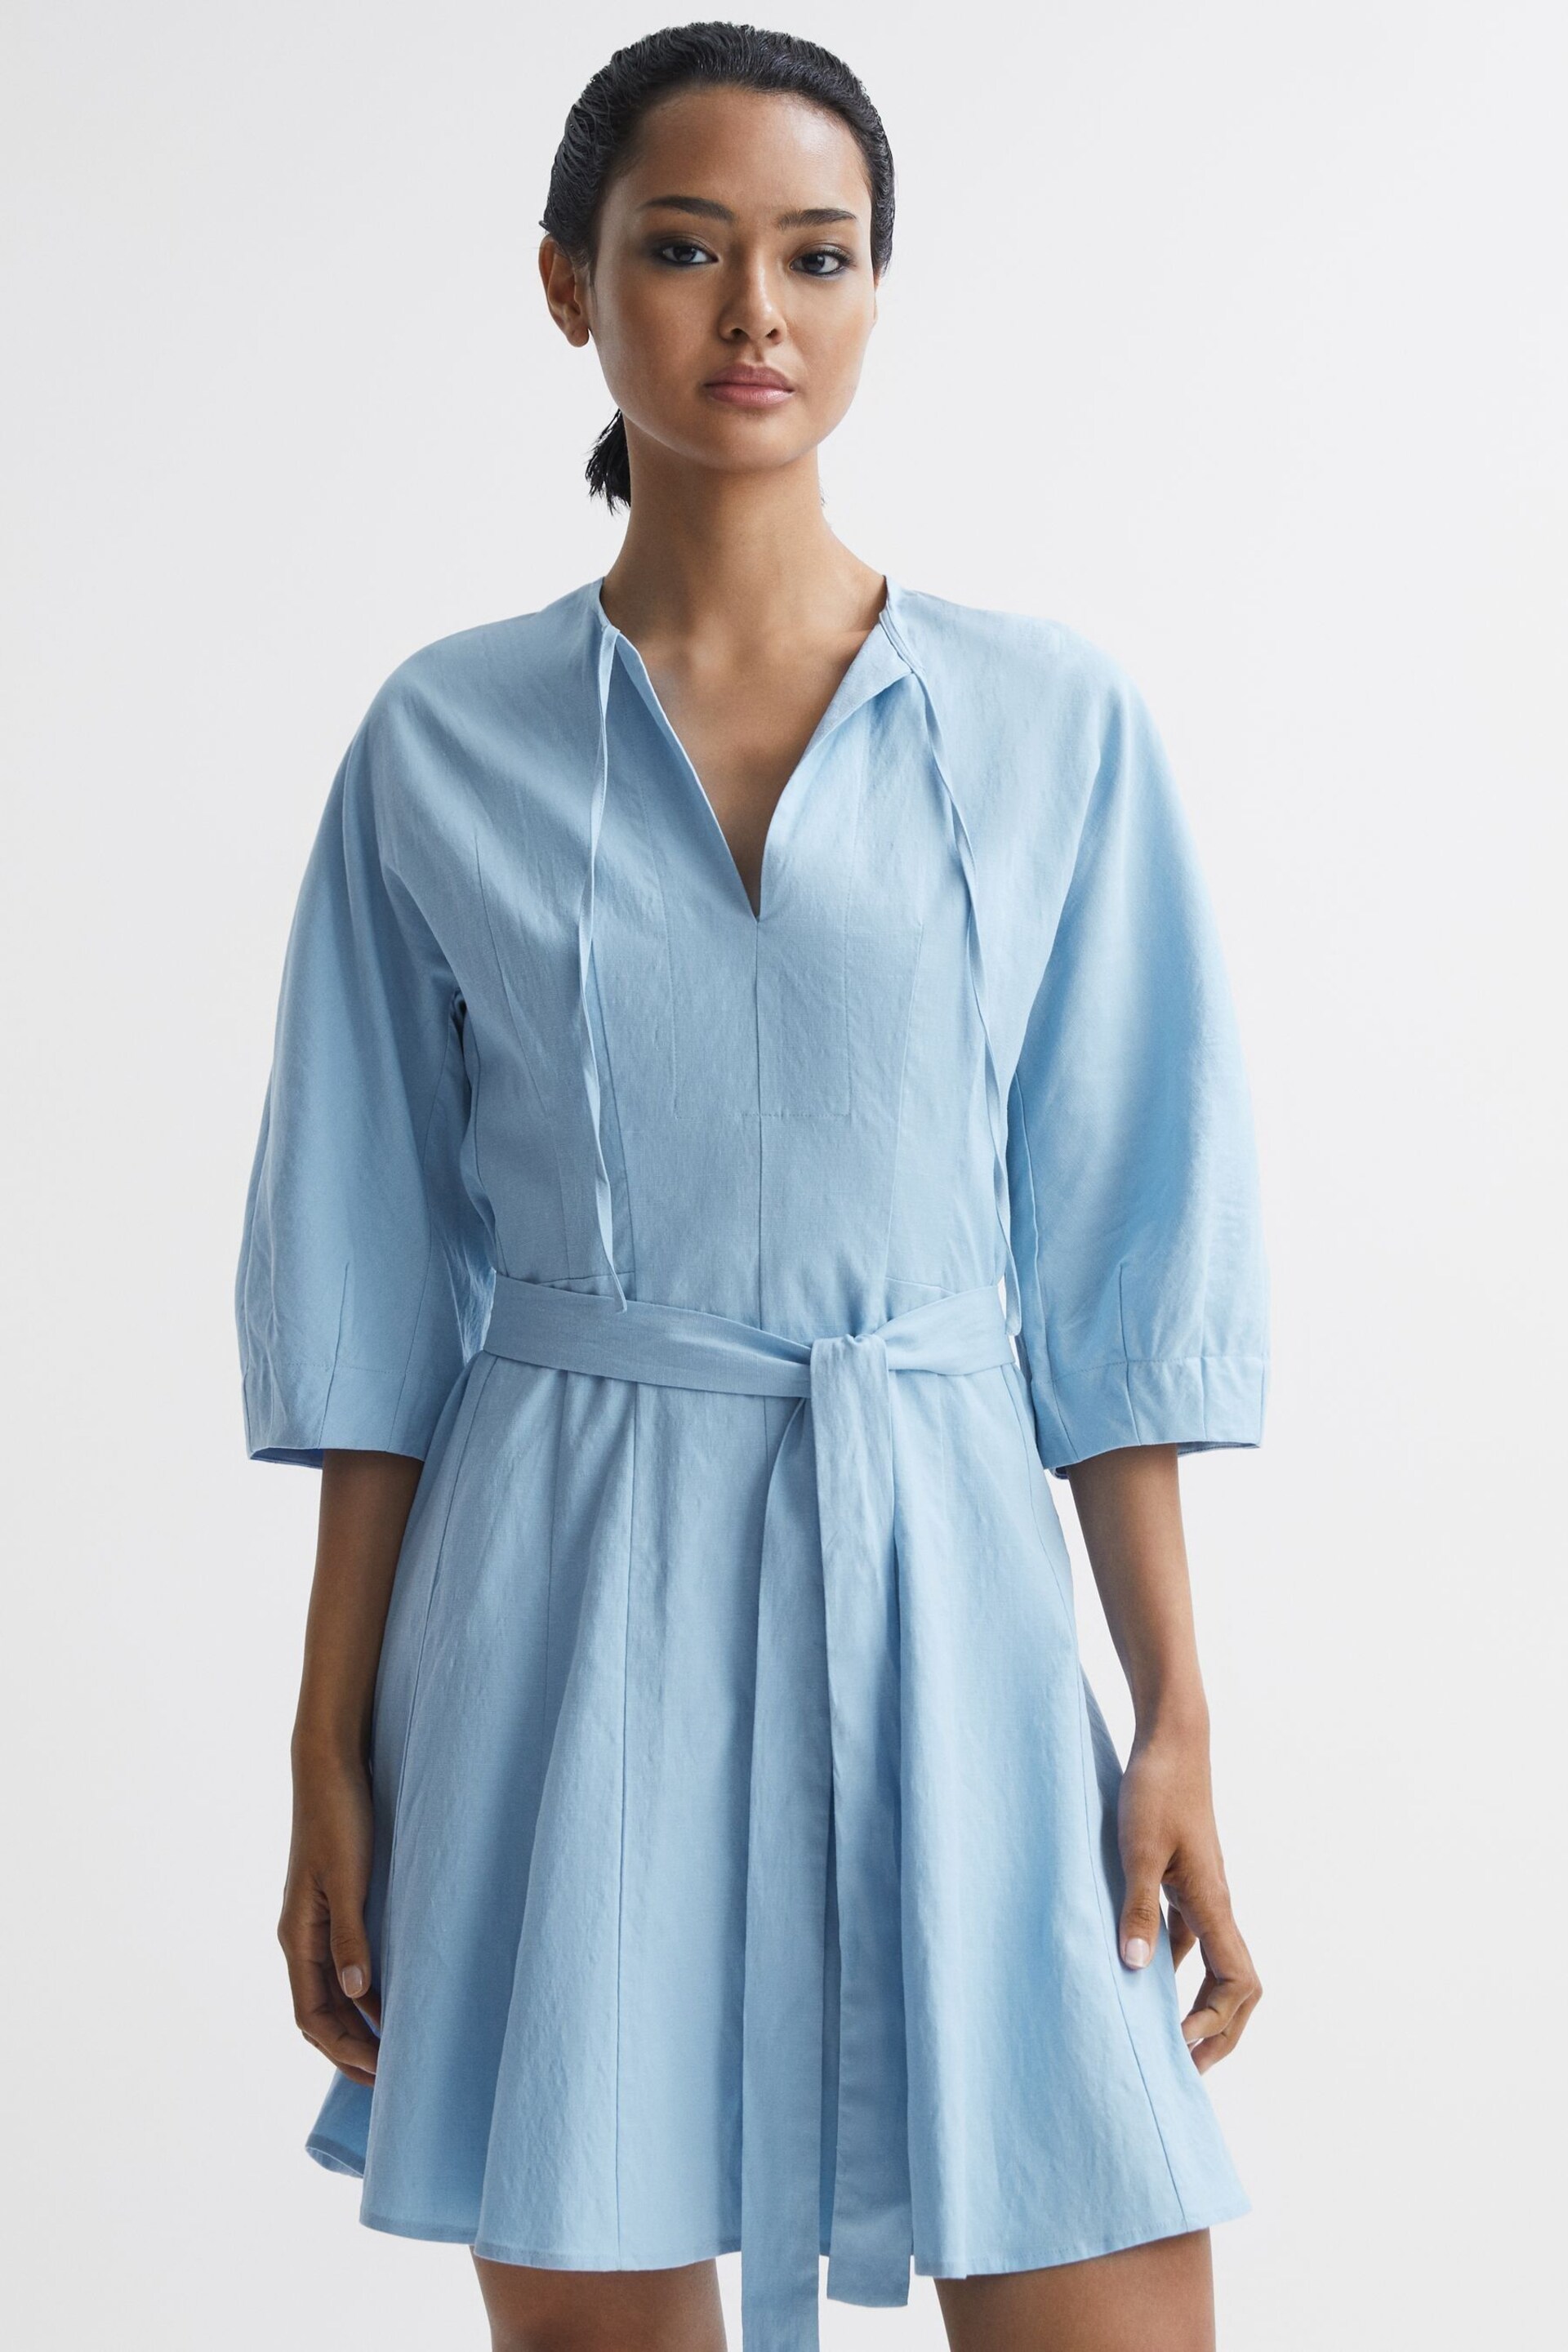 Reiss Blue Freida Relaxed Fit Self-Tie Mini Dress - Image 6 of 6